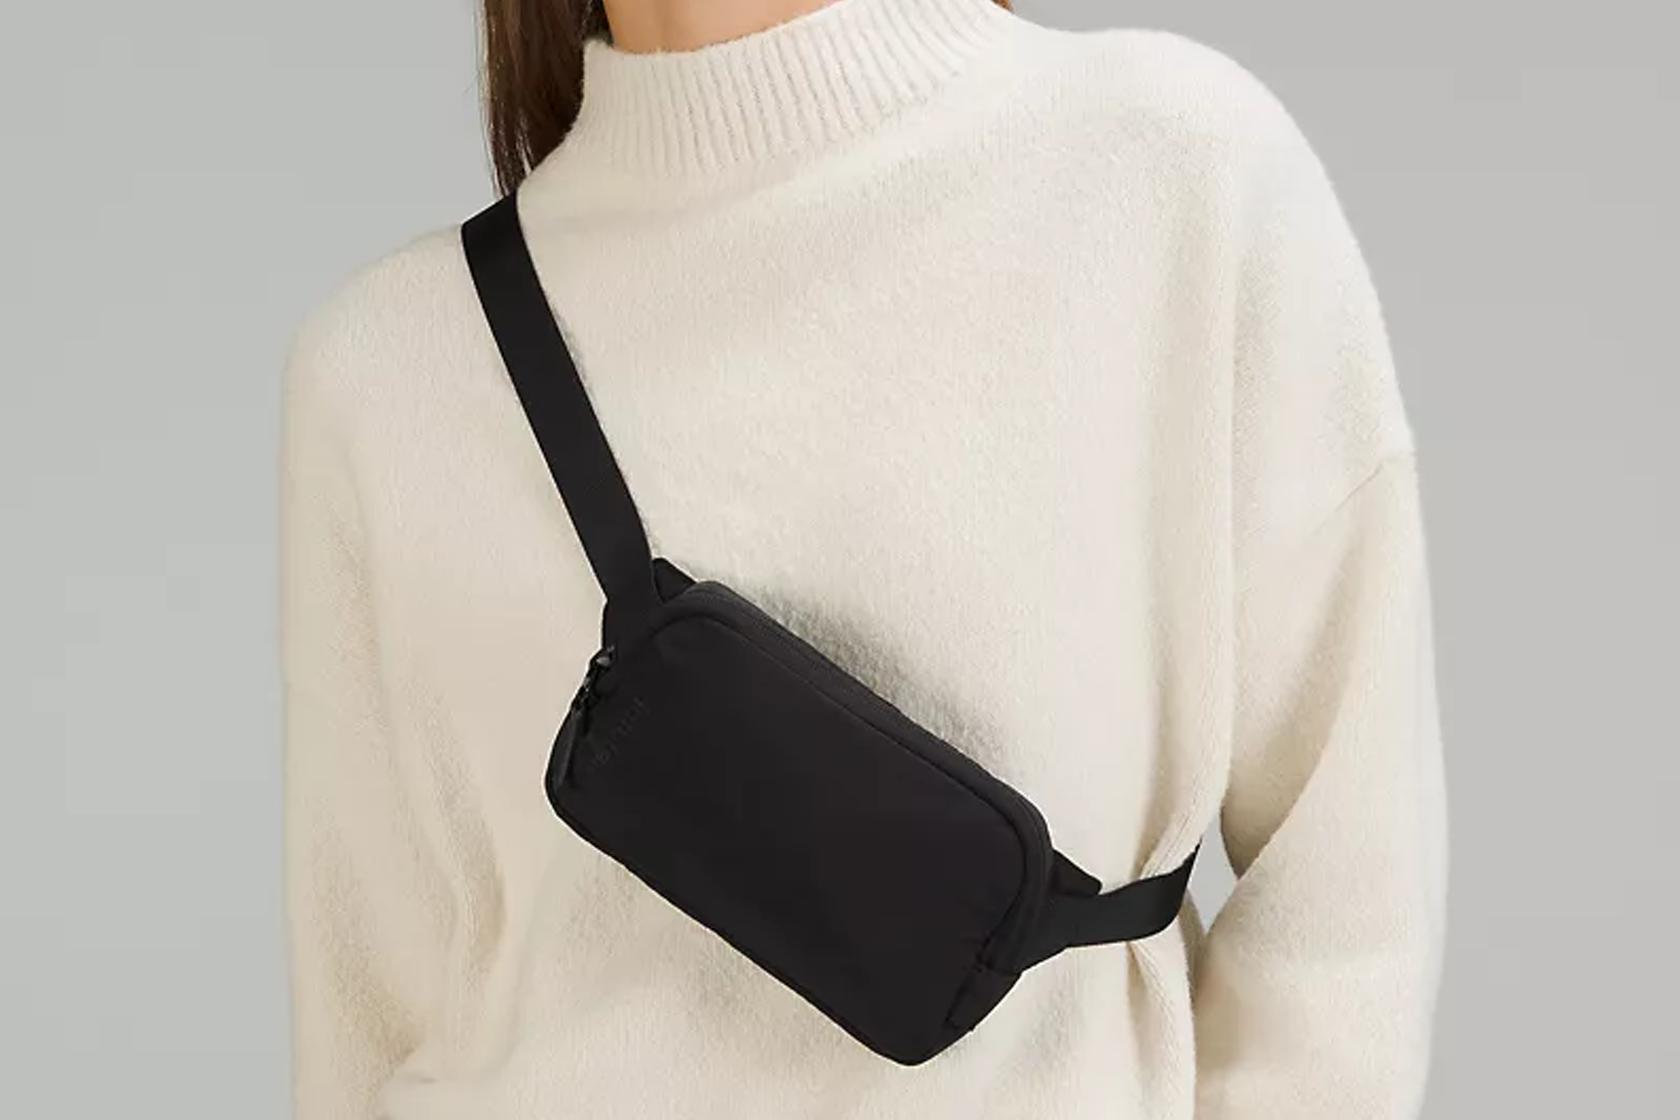 lululemon Mini Belt Bag: Where to buy the new accessory